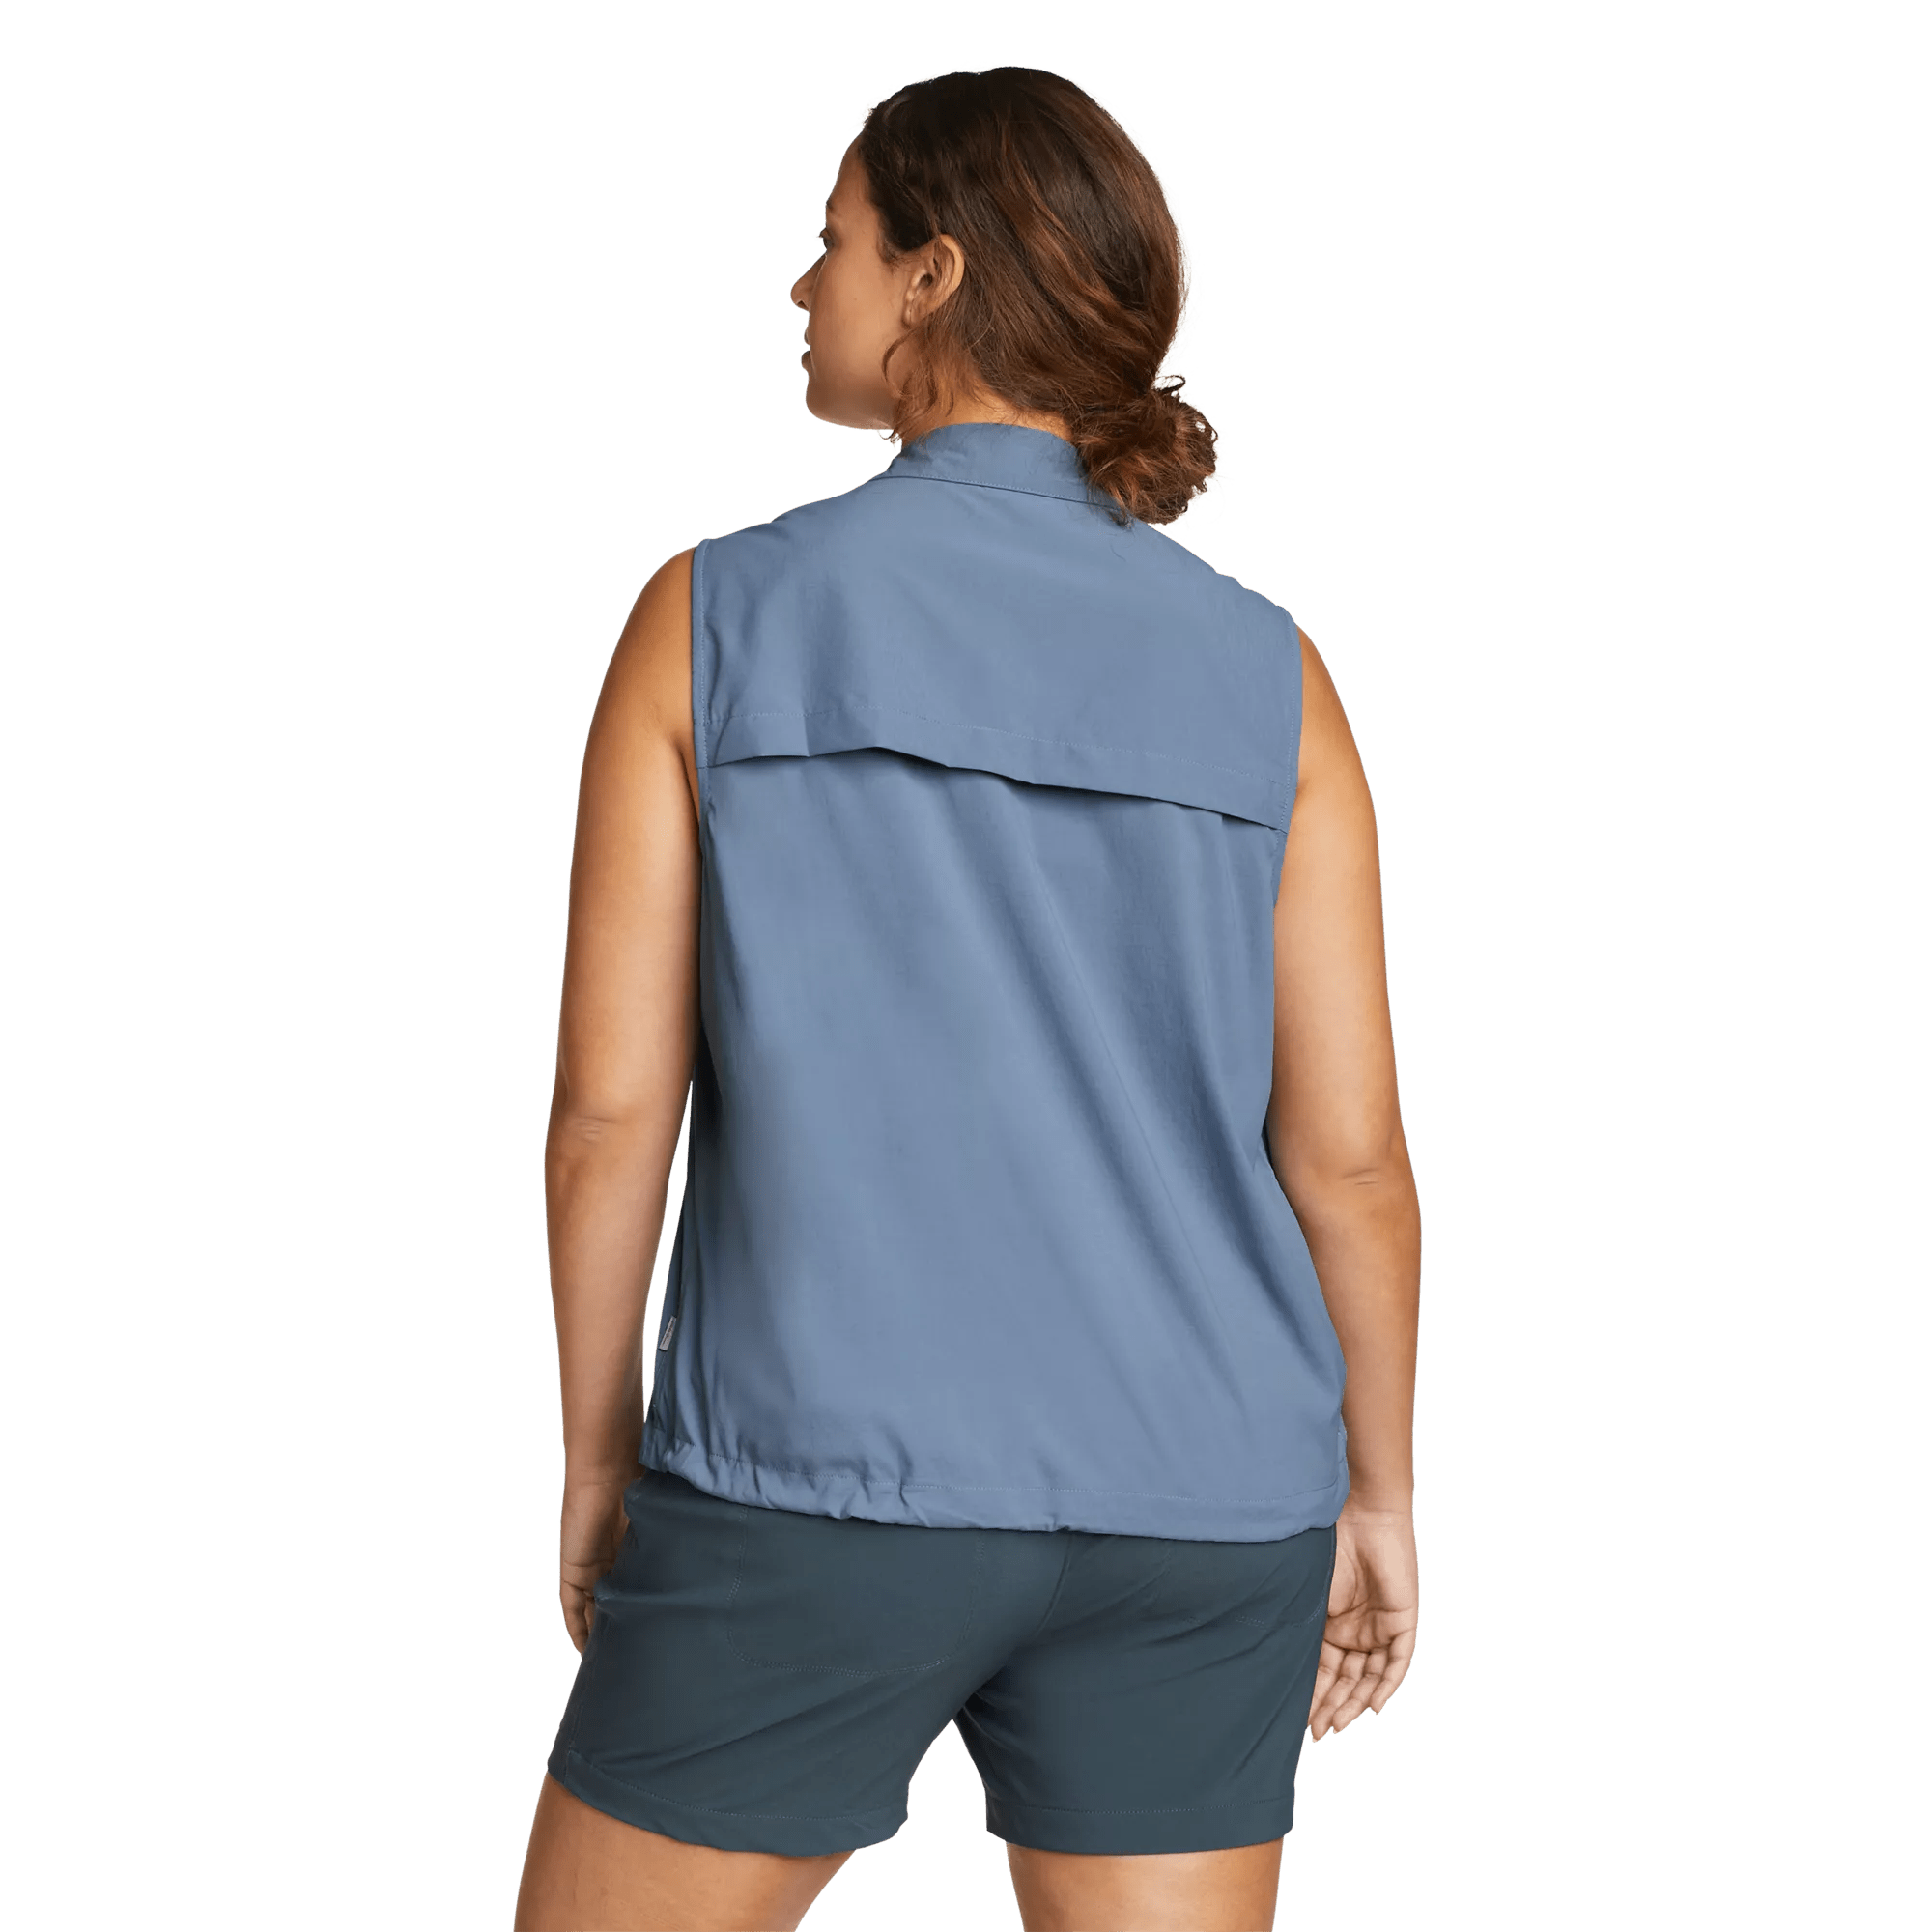 Boulder Trail Sleeveless Shirt - Solid